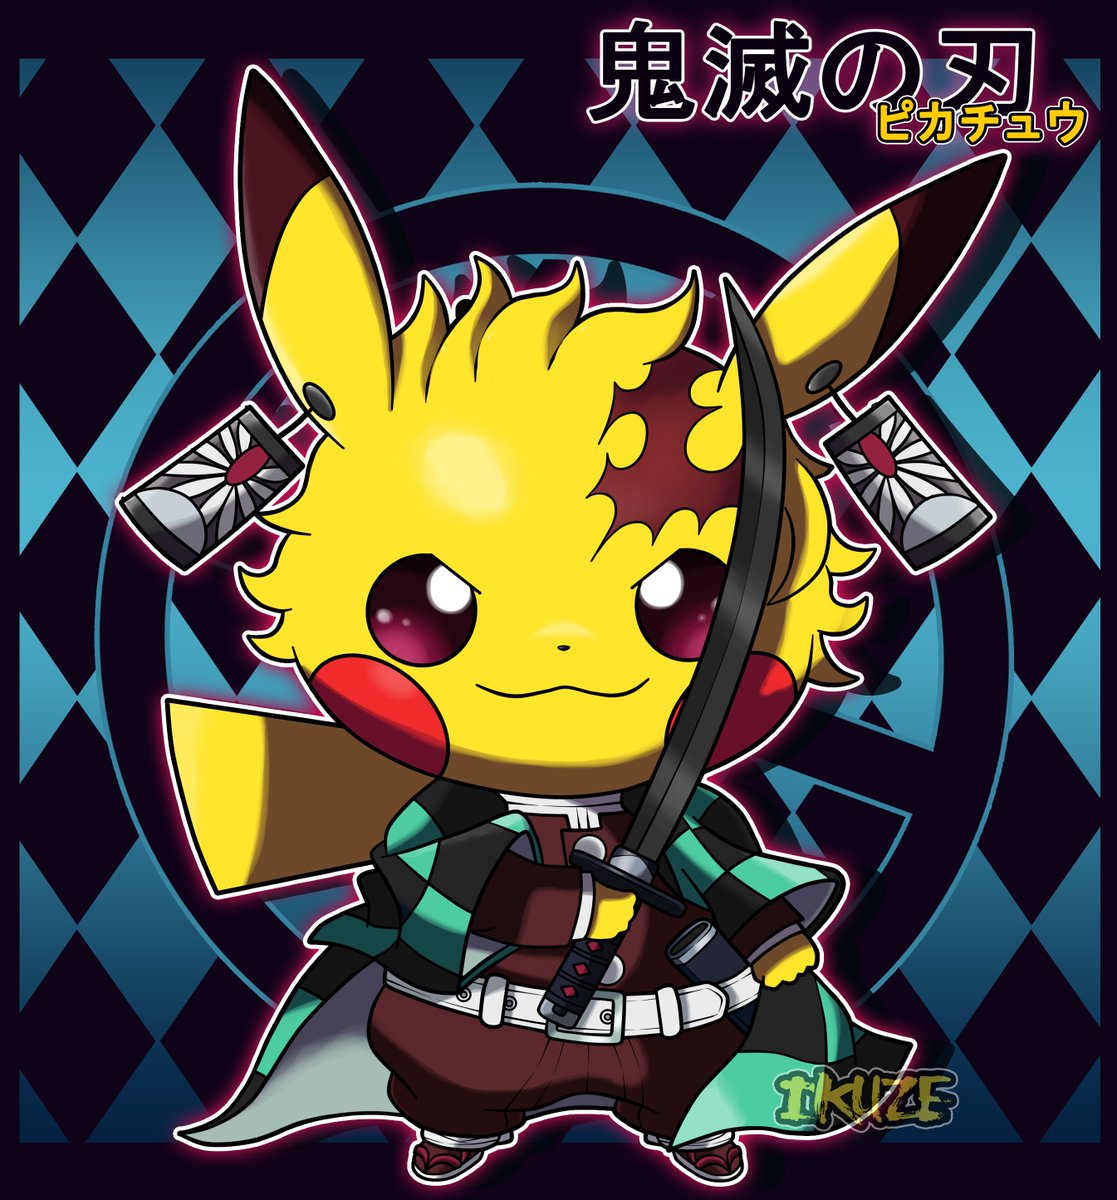 Ikuze En Twitter Ztatik1 Pikachu Pokemon ピカチュウ ポケモン 鬼滅の刃